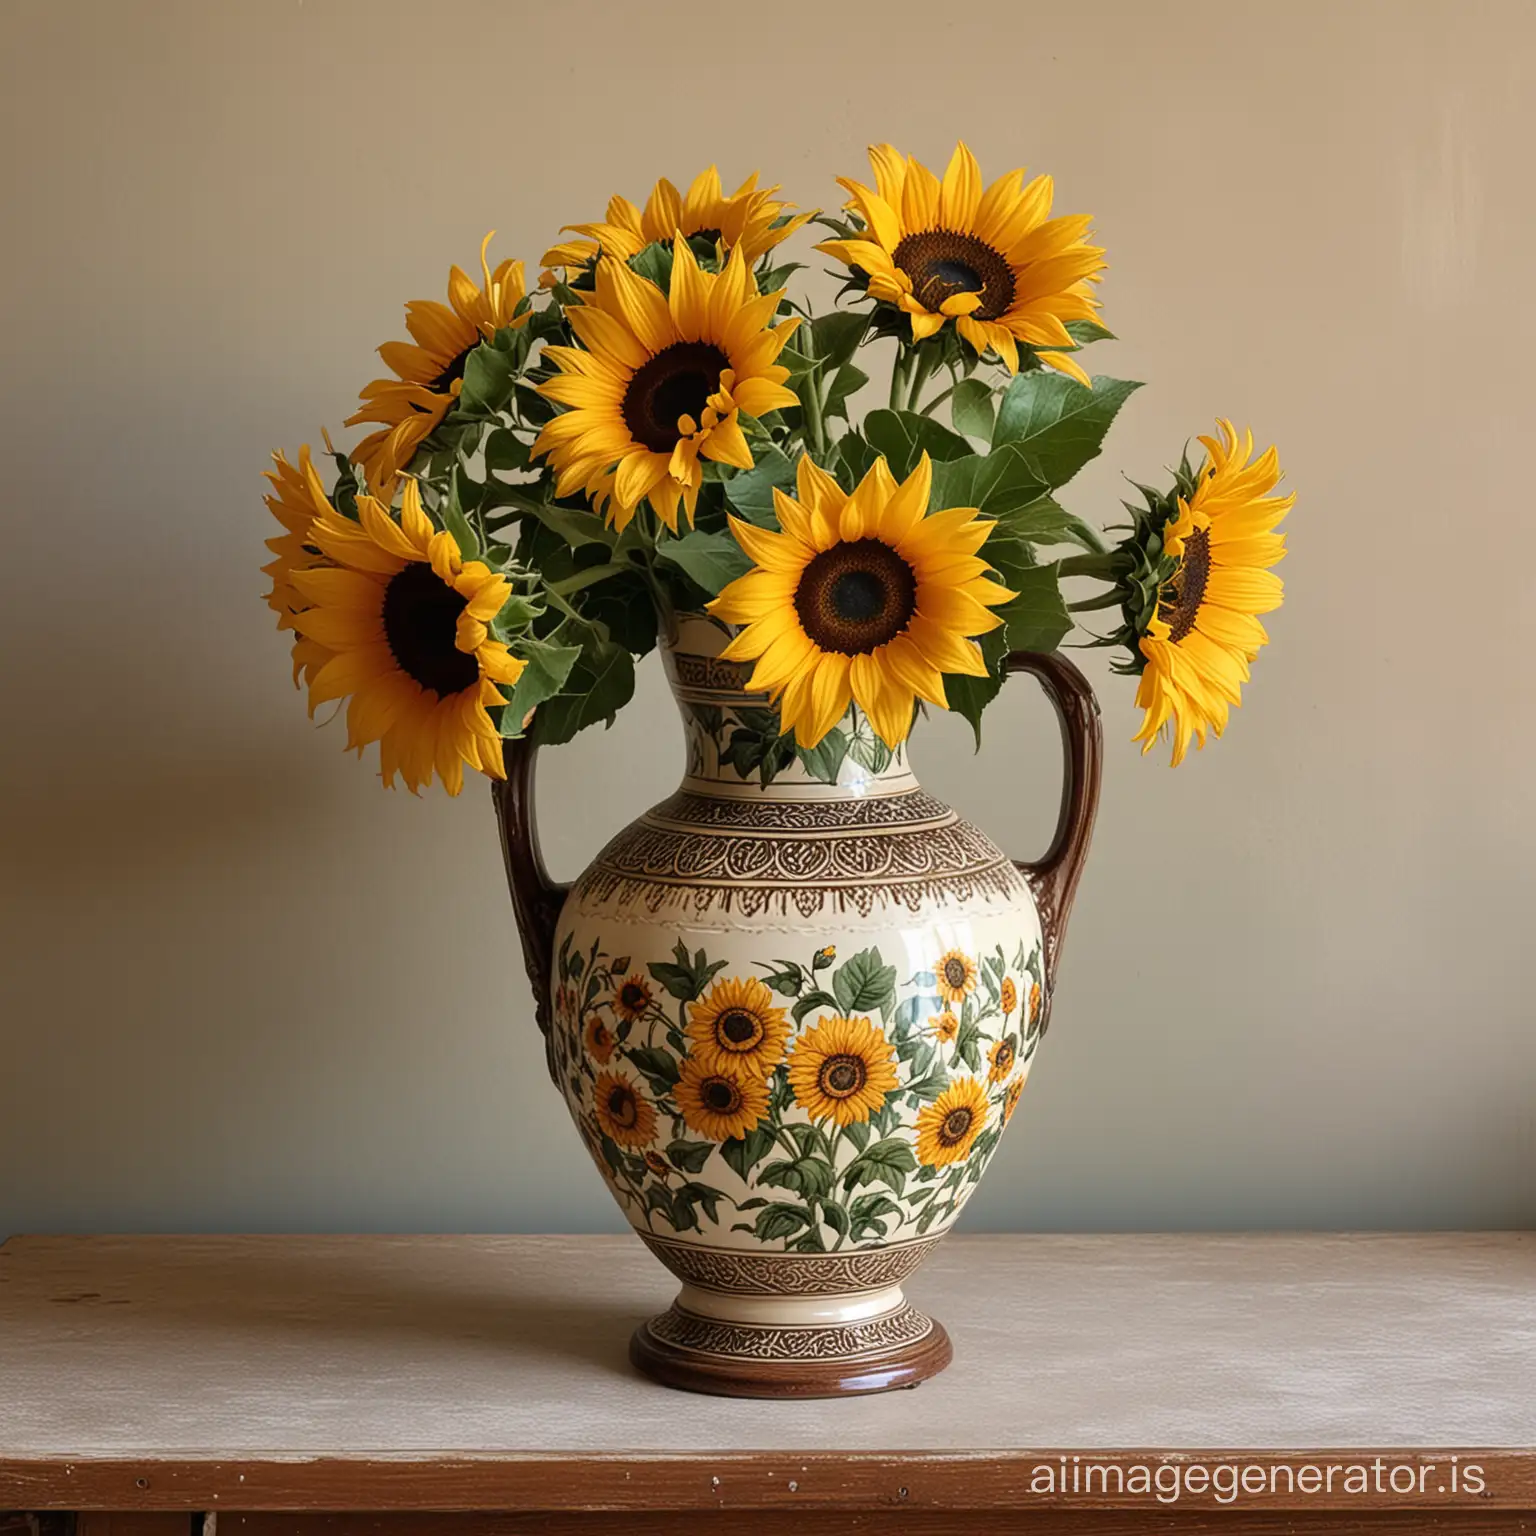 Vintage-Vase-Adorned-with-Vibrant-Sunflowers